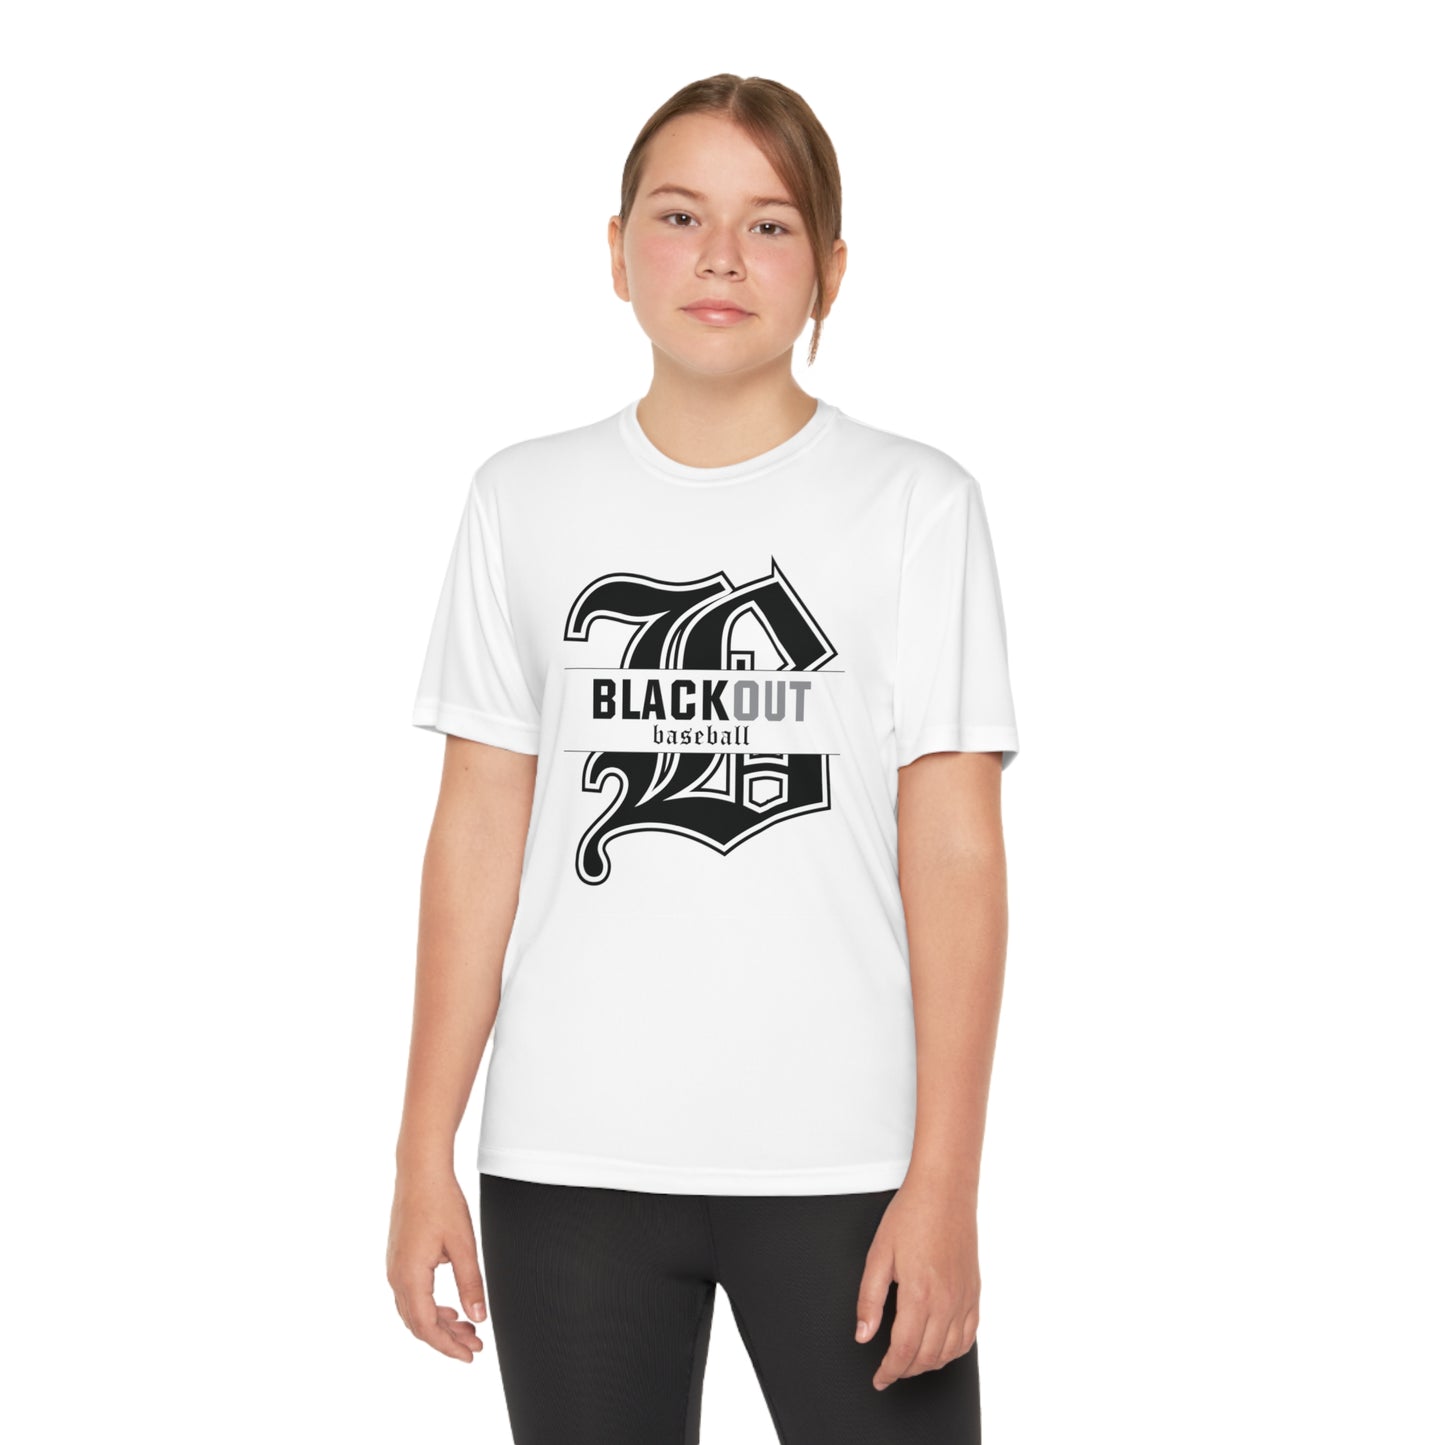 YOUTH - "Blackout Baseball" Moisture-Wicking T-Shirt - (Black, White, or Gray)